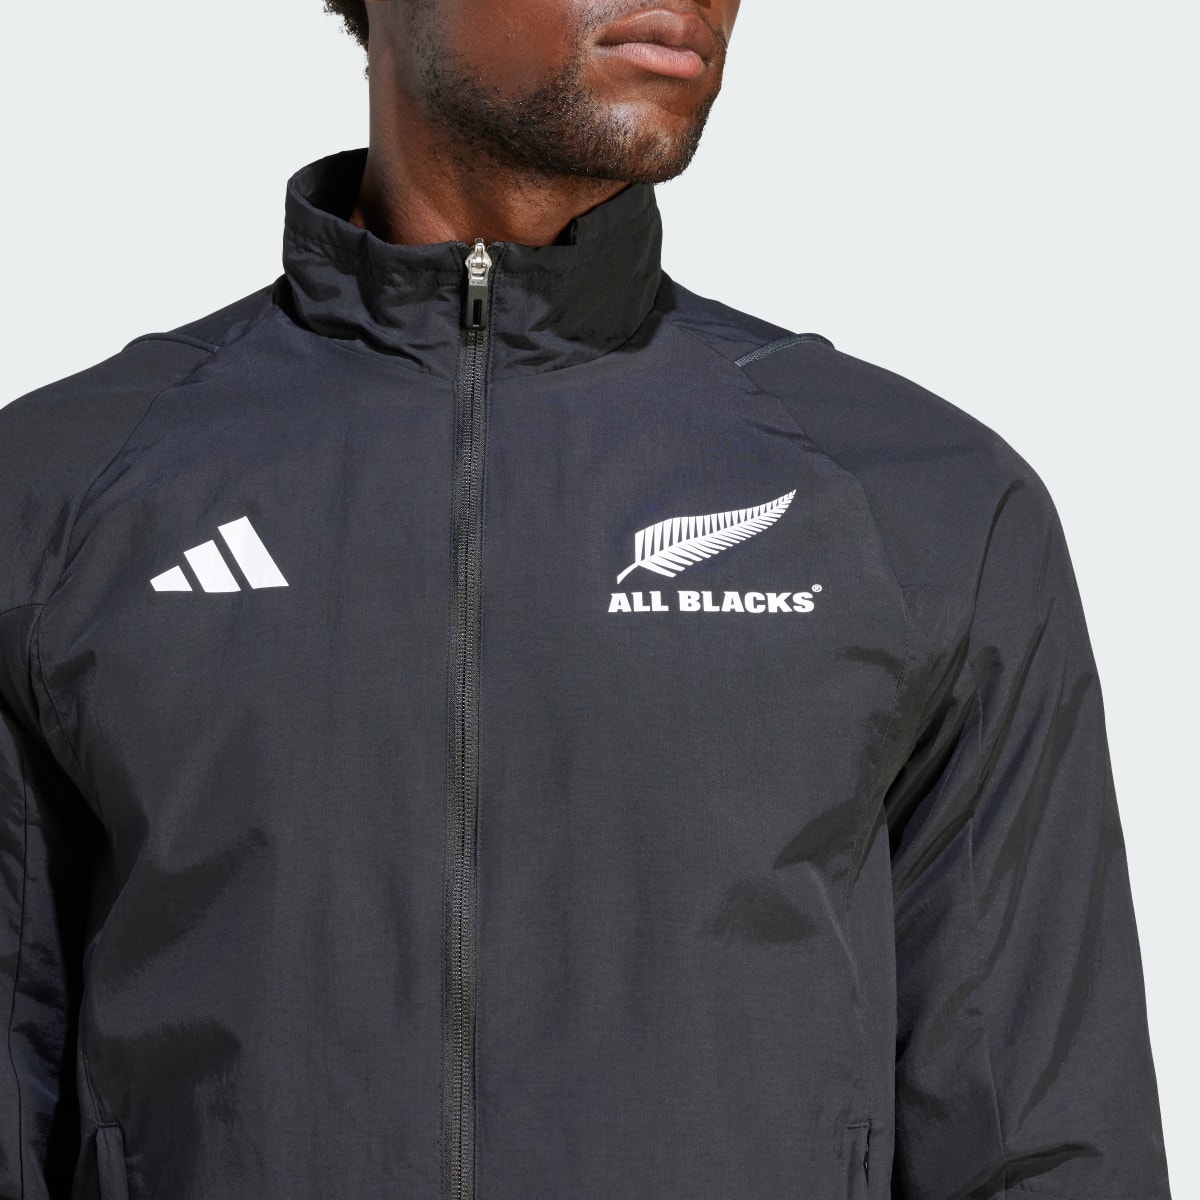 Adidas All Blacks Rugby Track Suit Jacket. 9